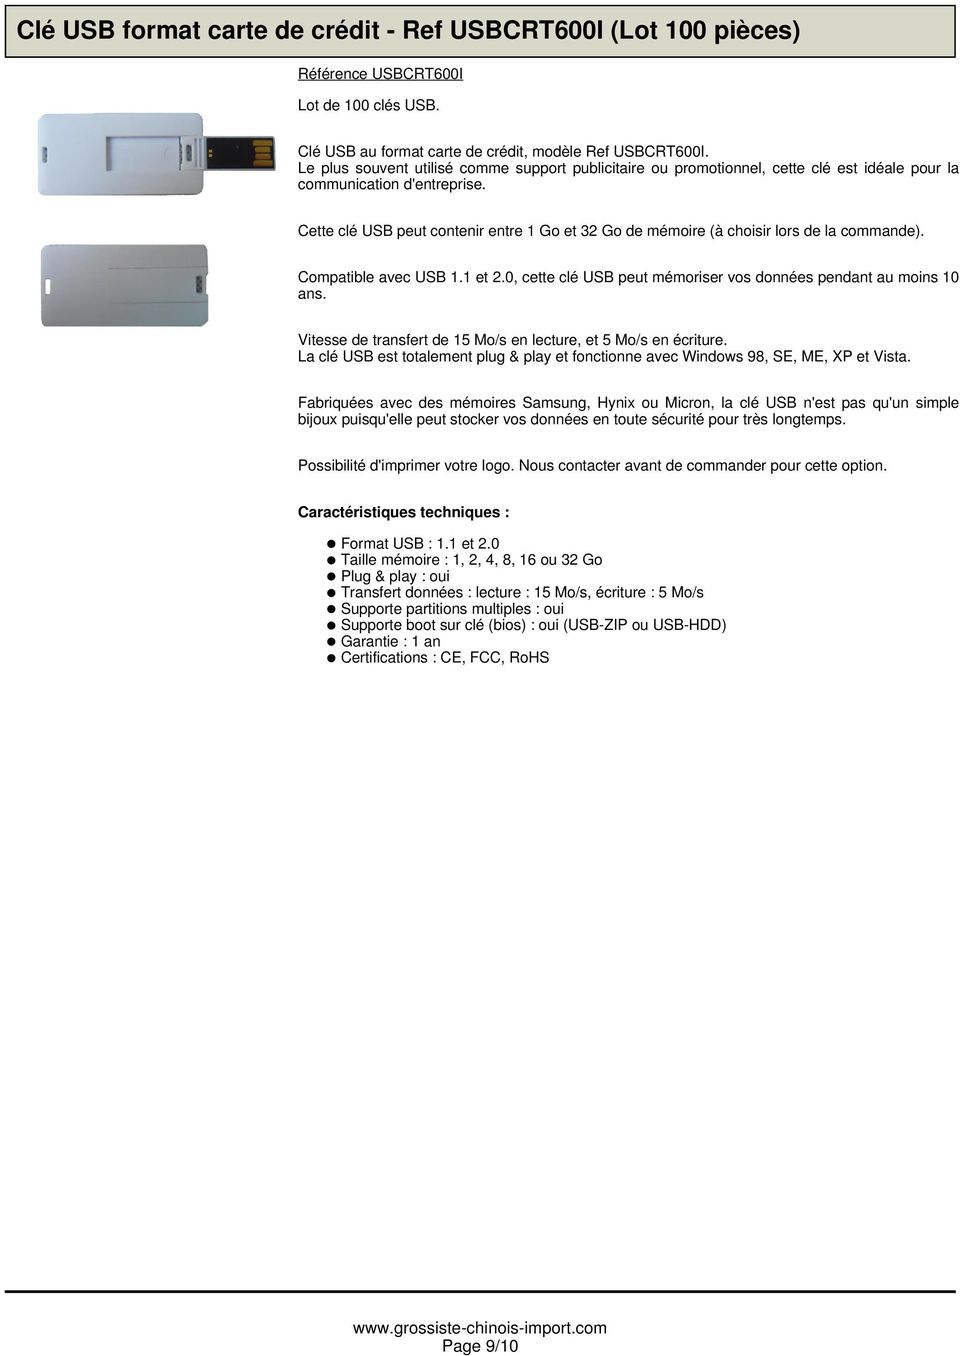 USBCRT600I Clé USB au format carte de